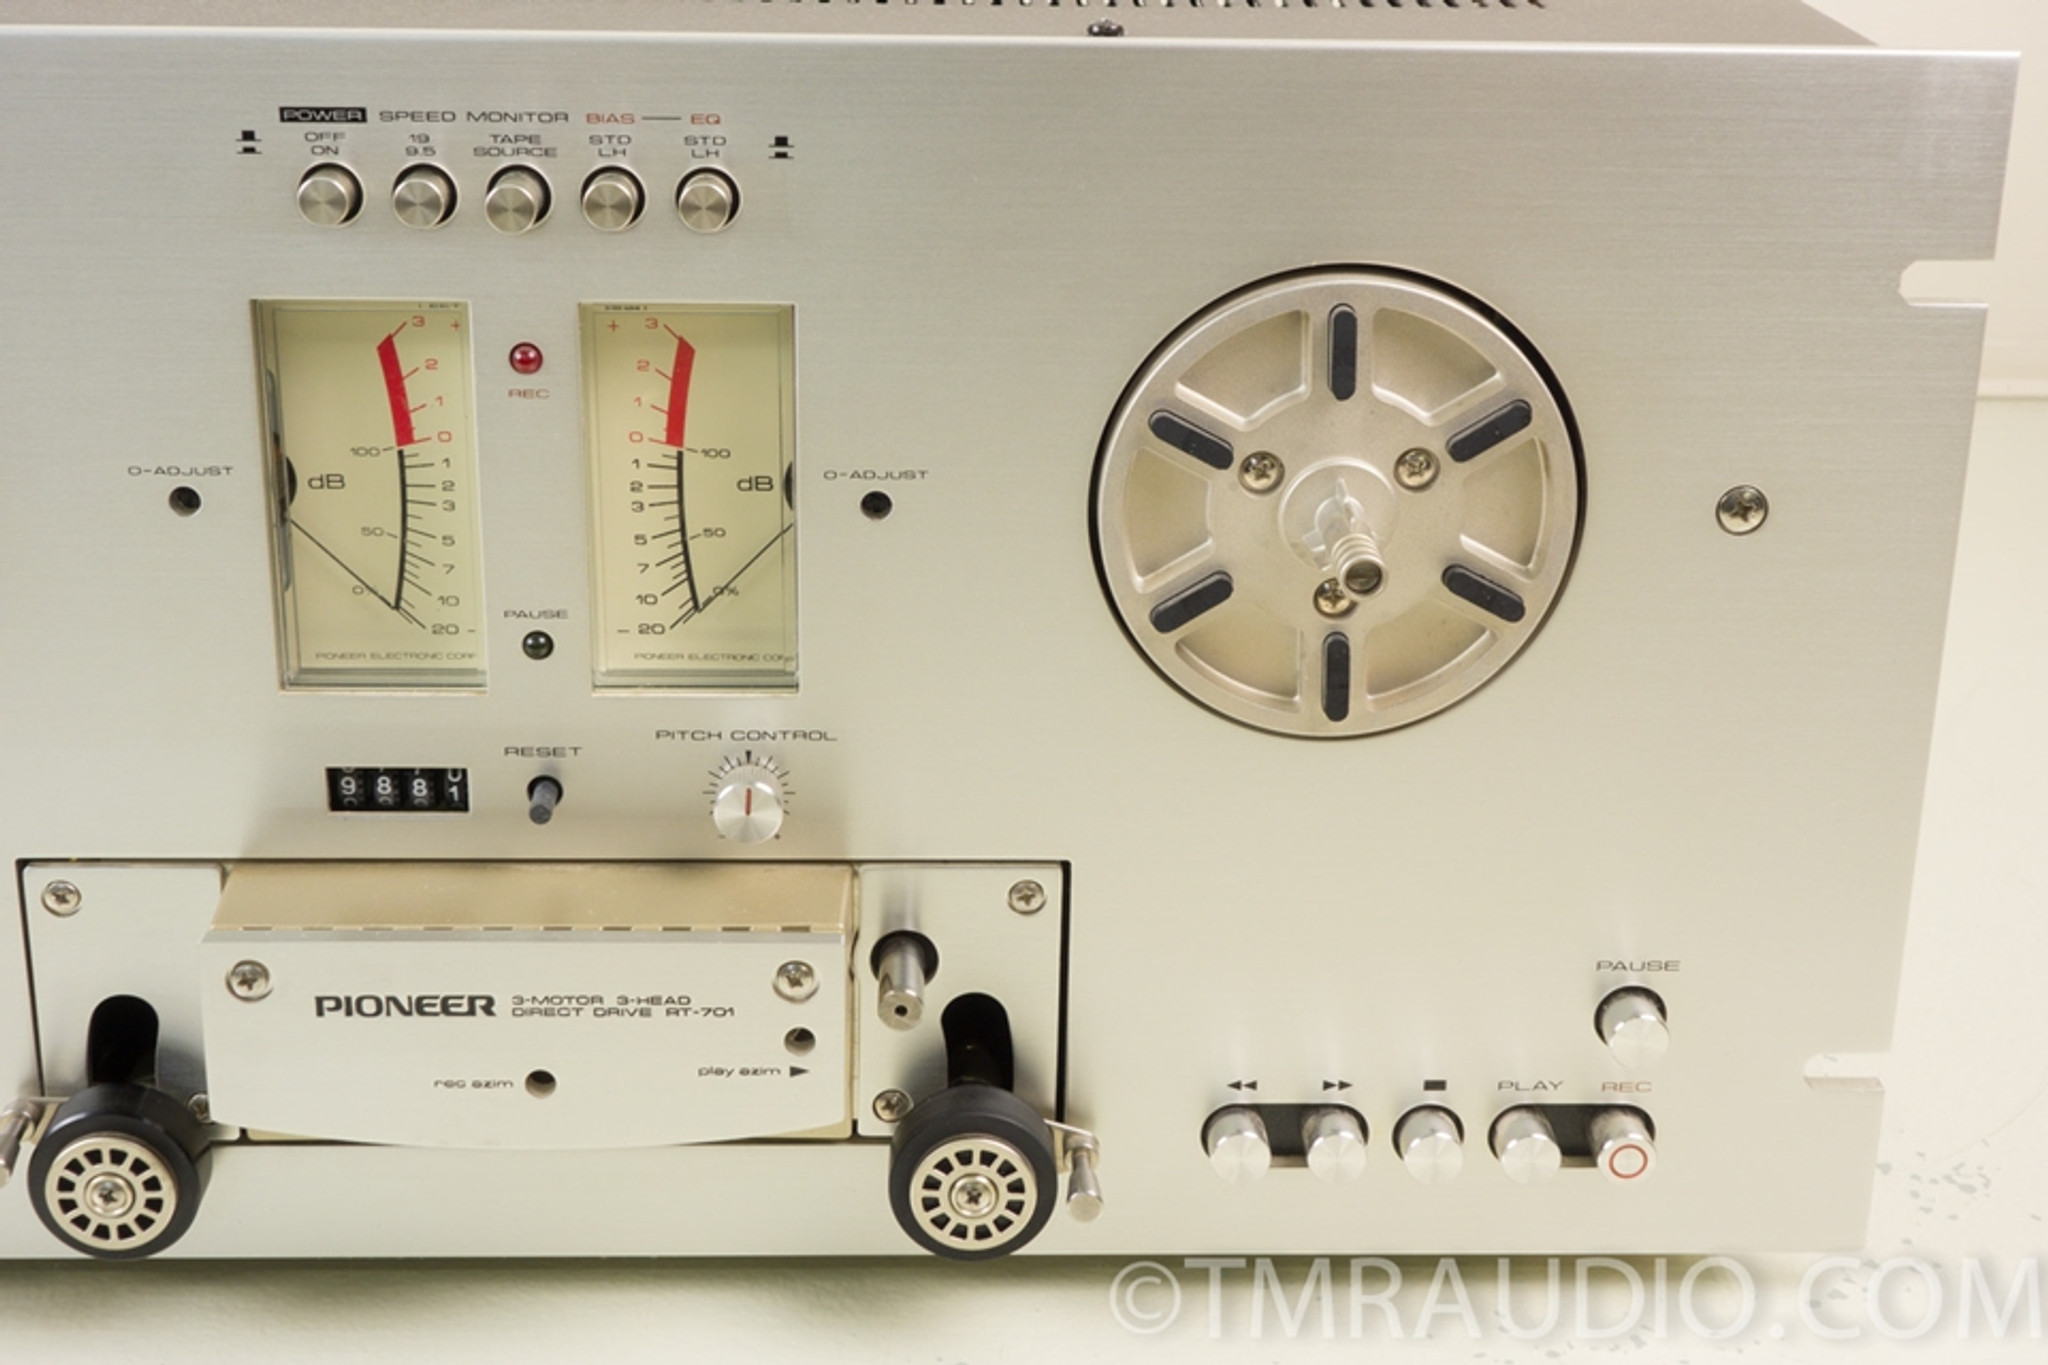 Empire Model 701 Vintage Reel to Reel Tape Recorder